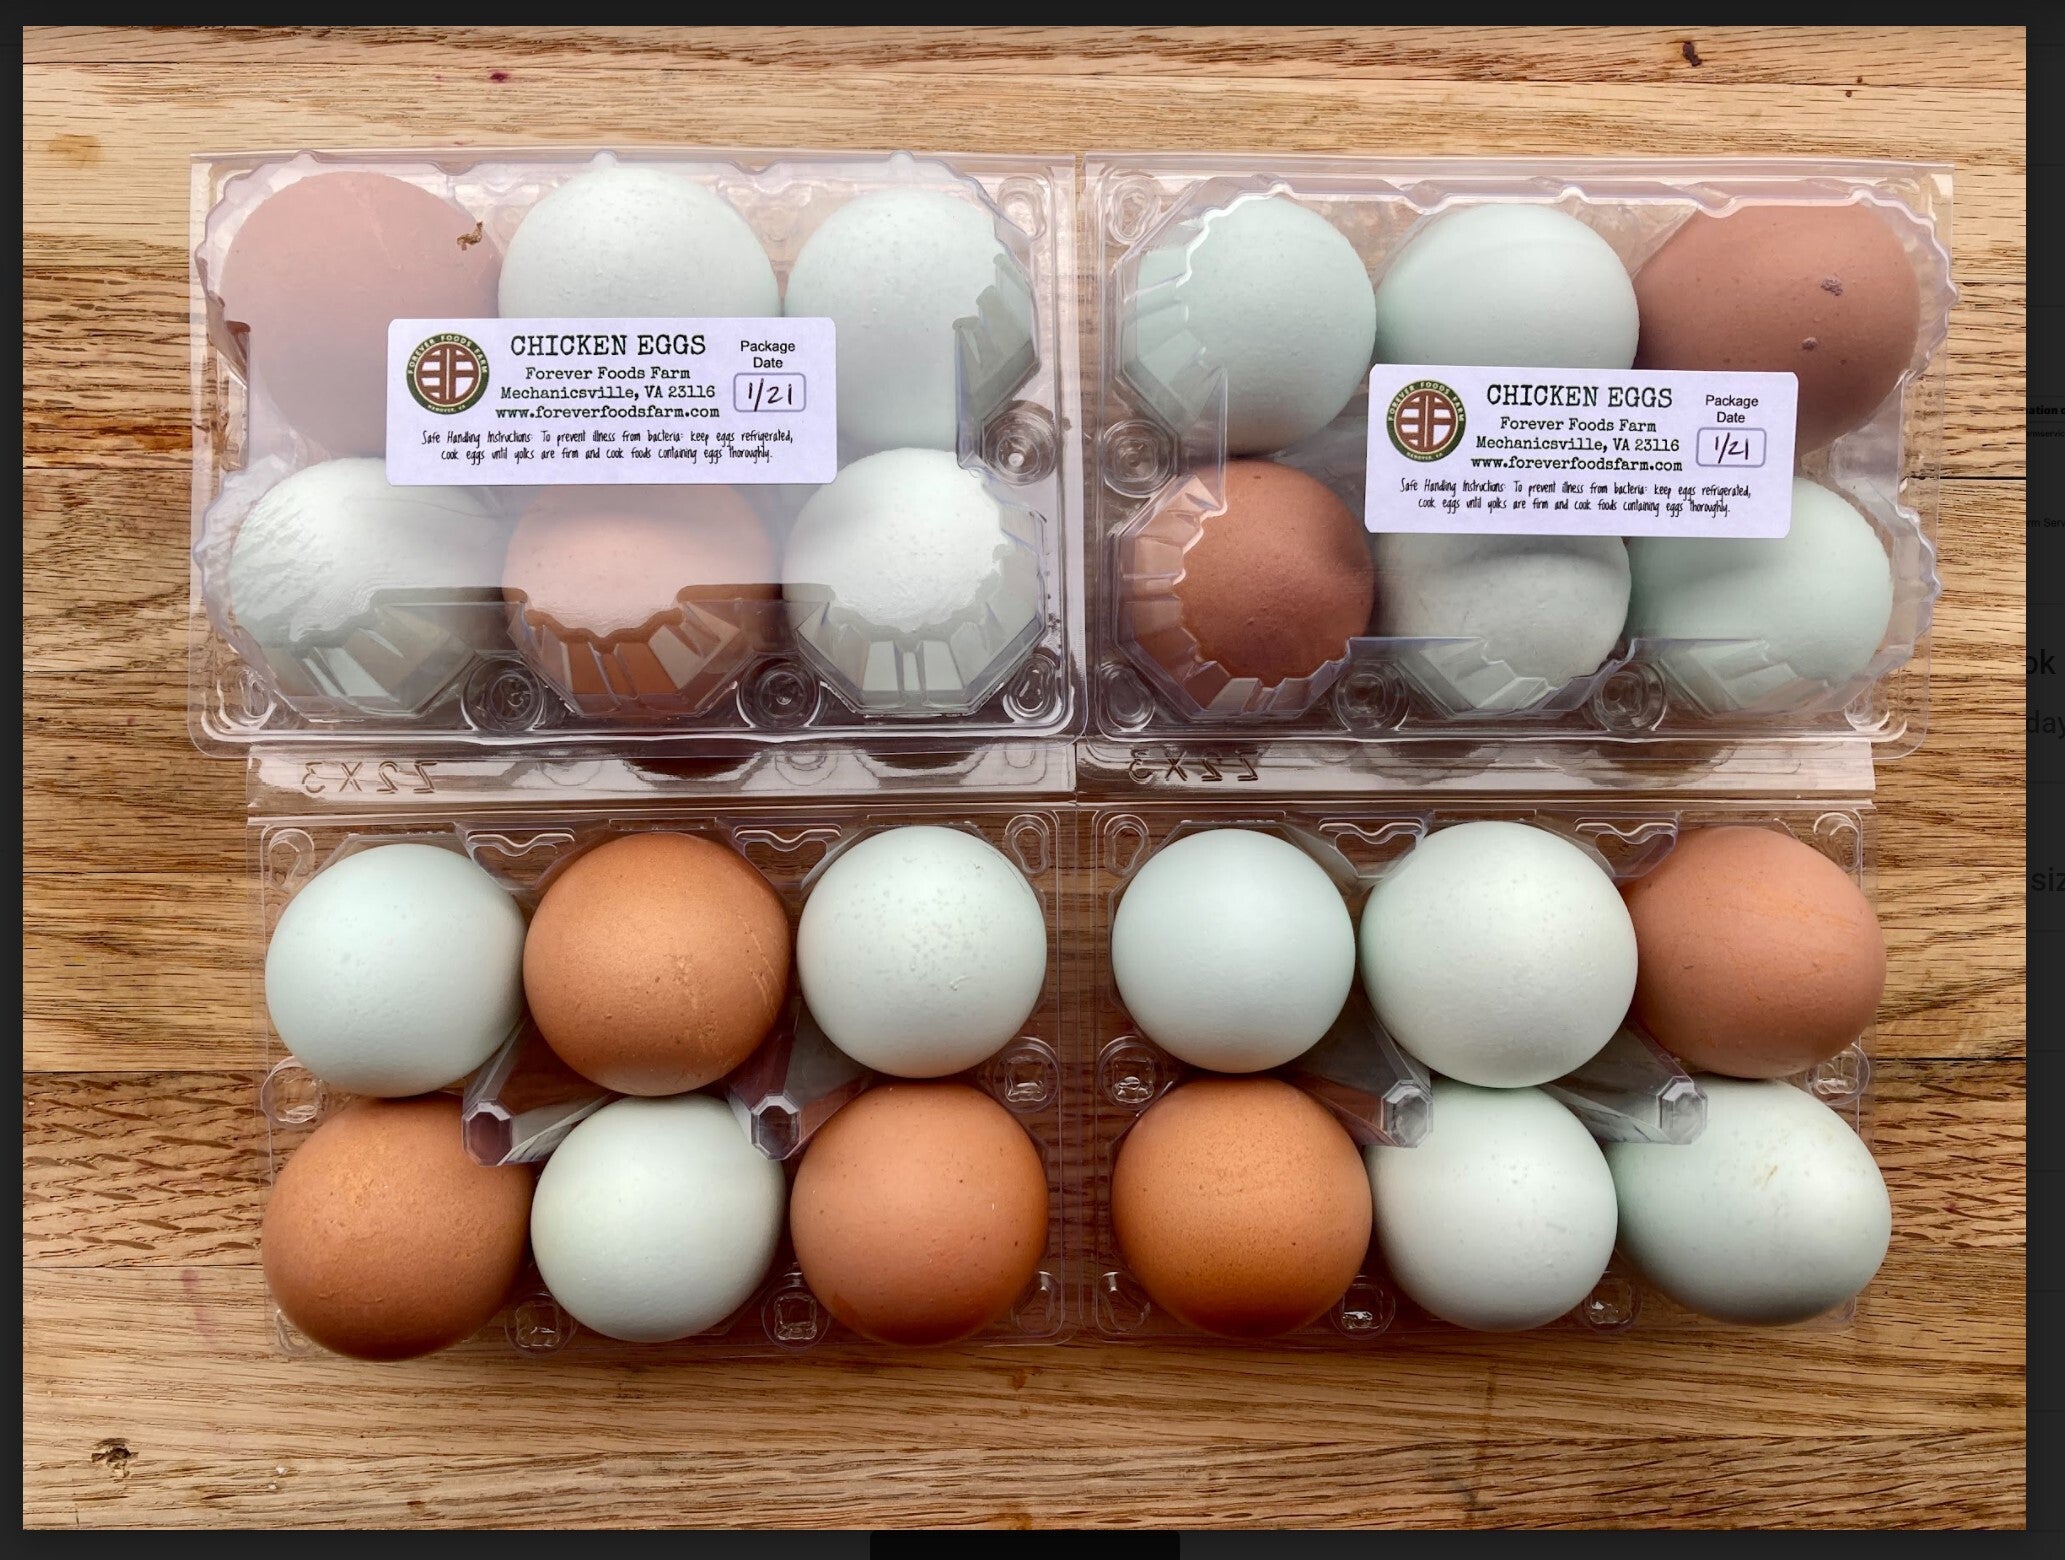 The Incredible Egg Washer  Incredible eggs, Chicken eggs, Farm fresh eggs